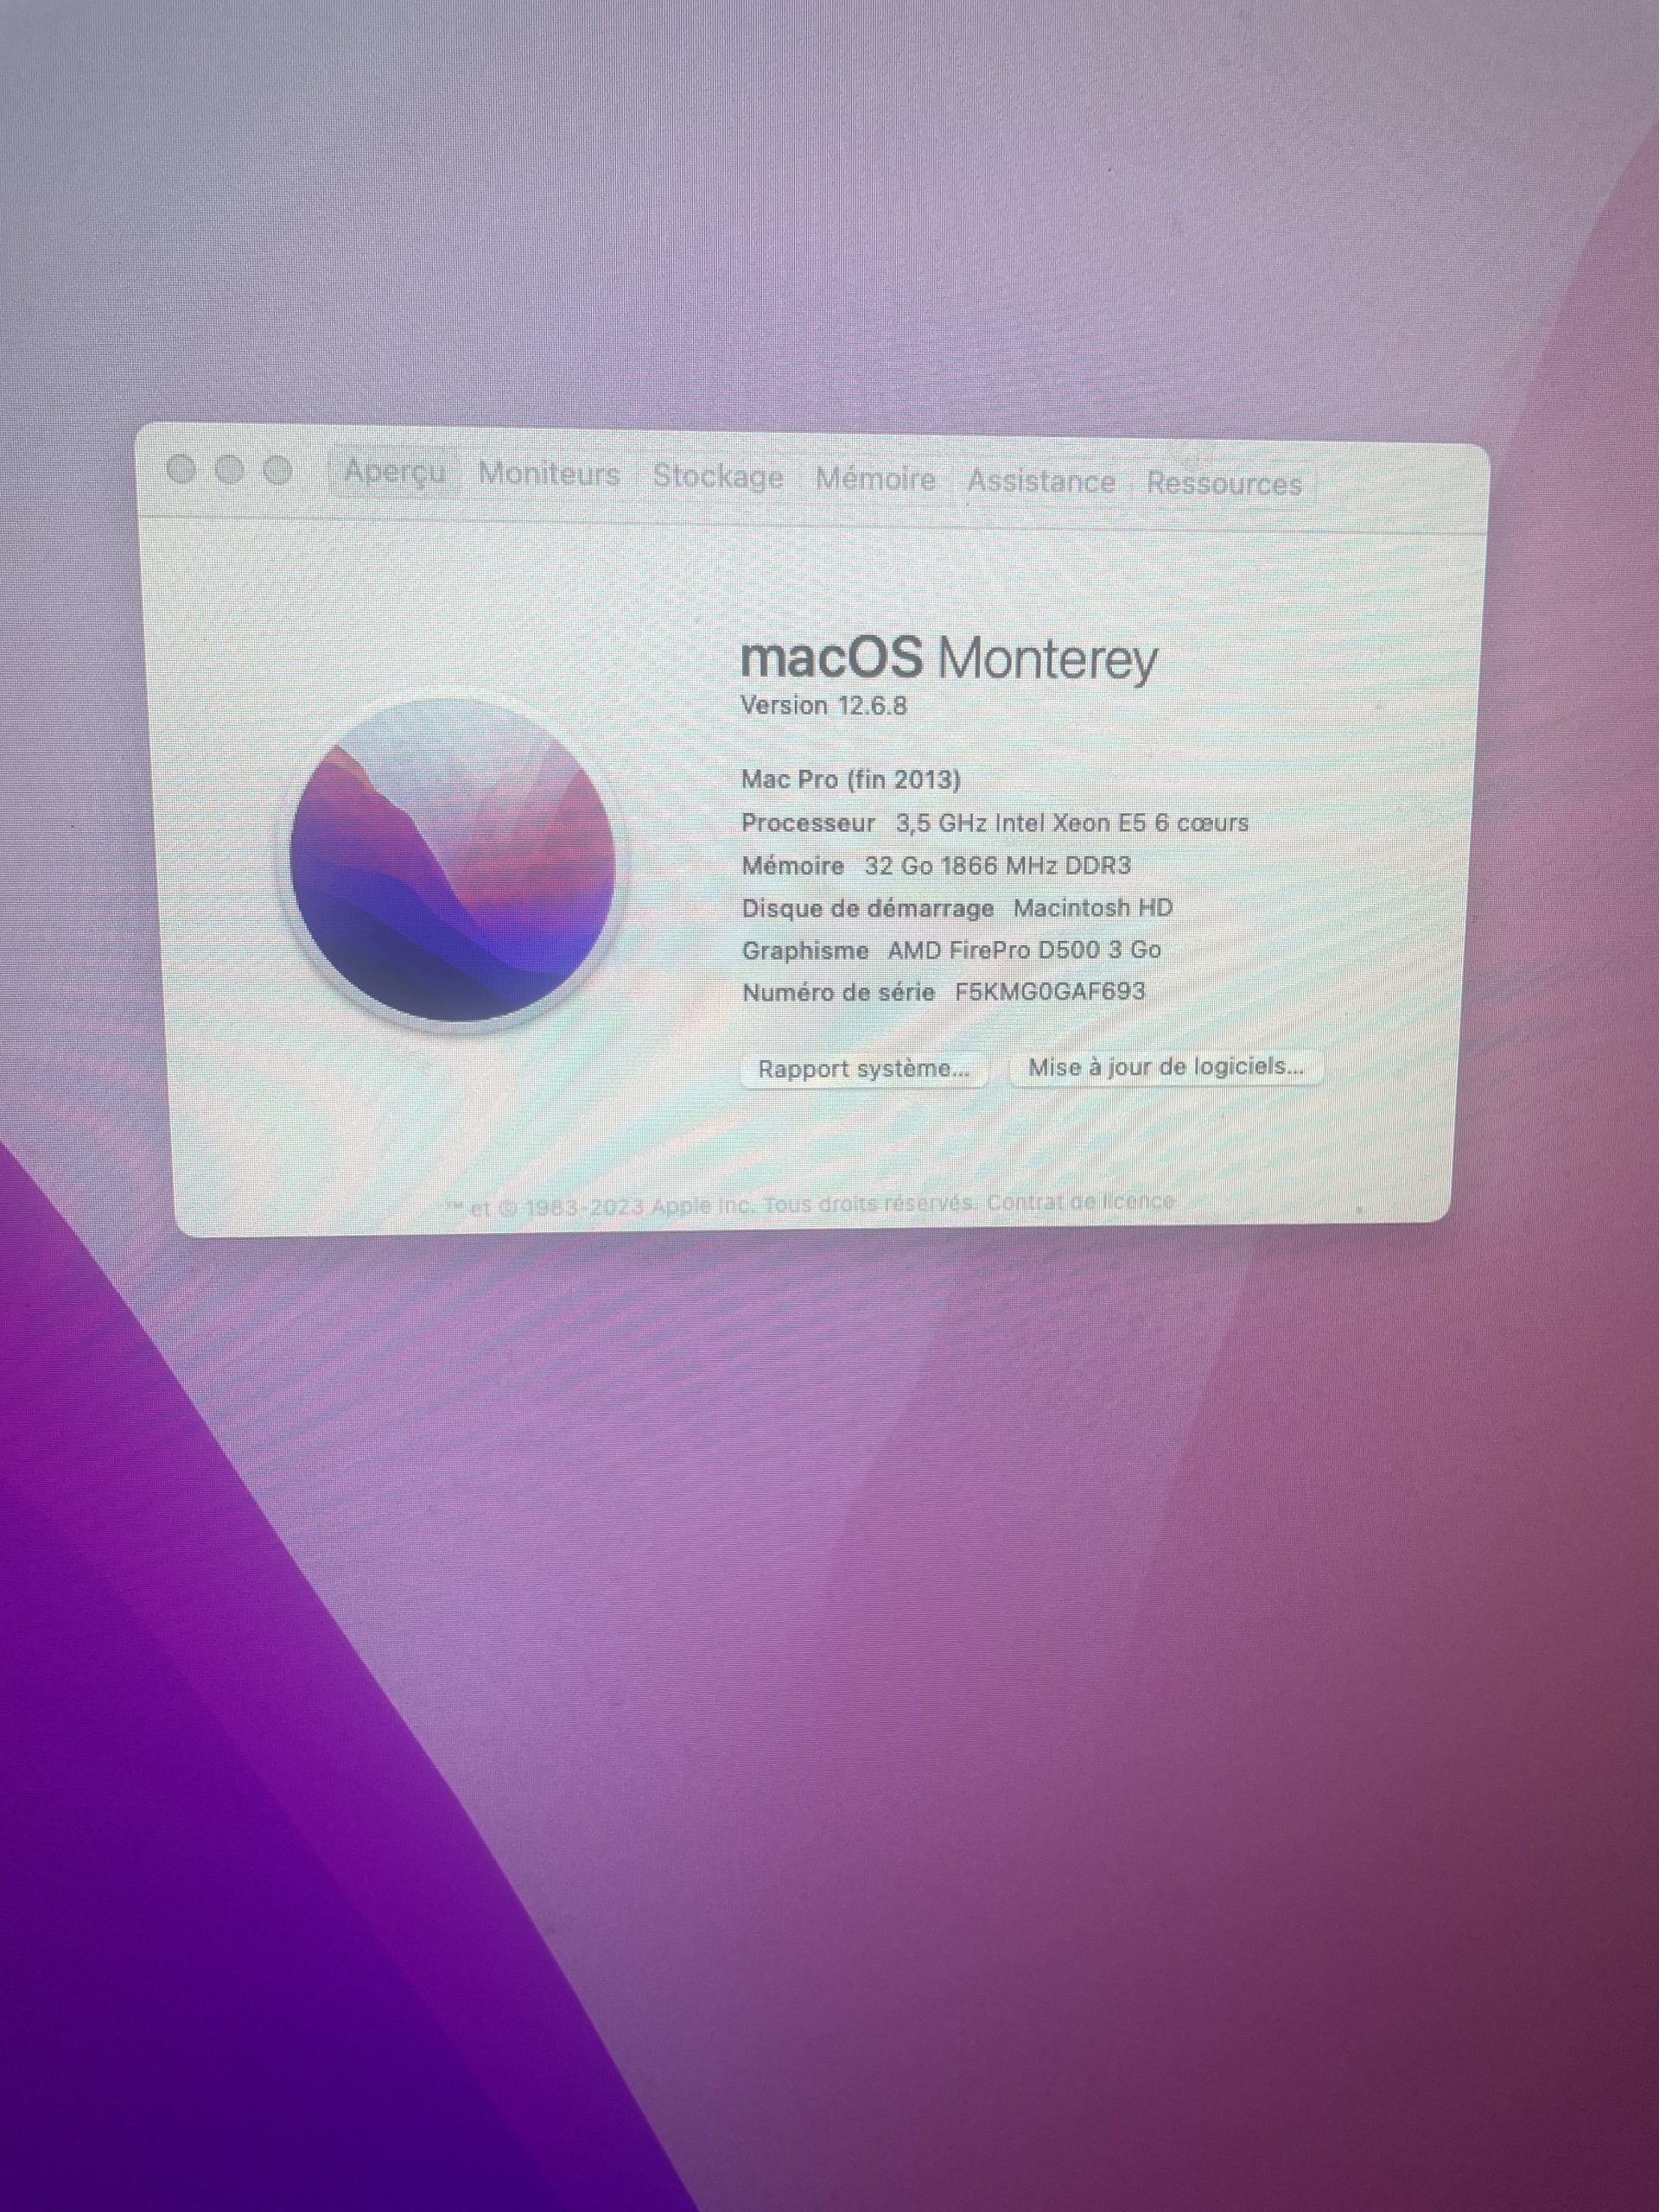 Mac Pro 2013 6 cœurs 32 Go Ram Ssd 1 To